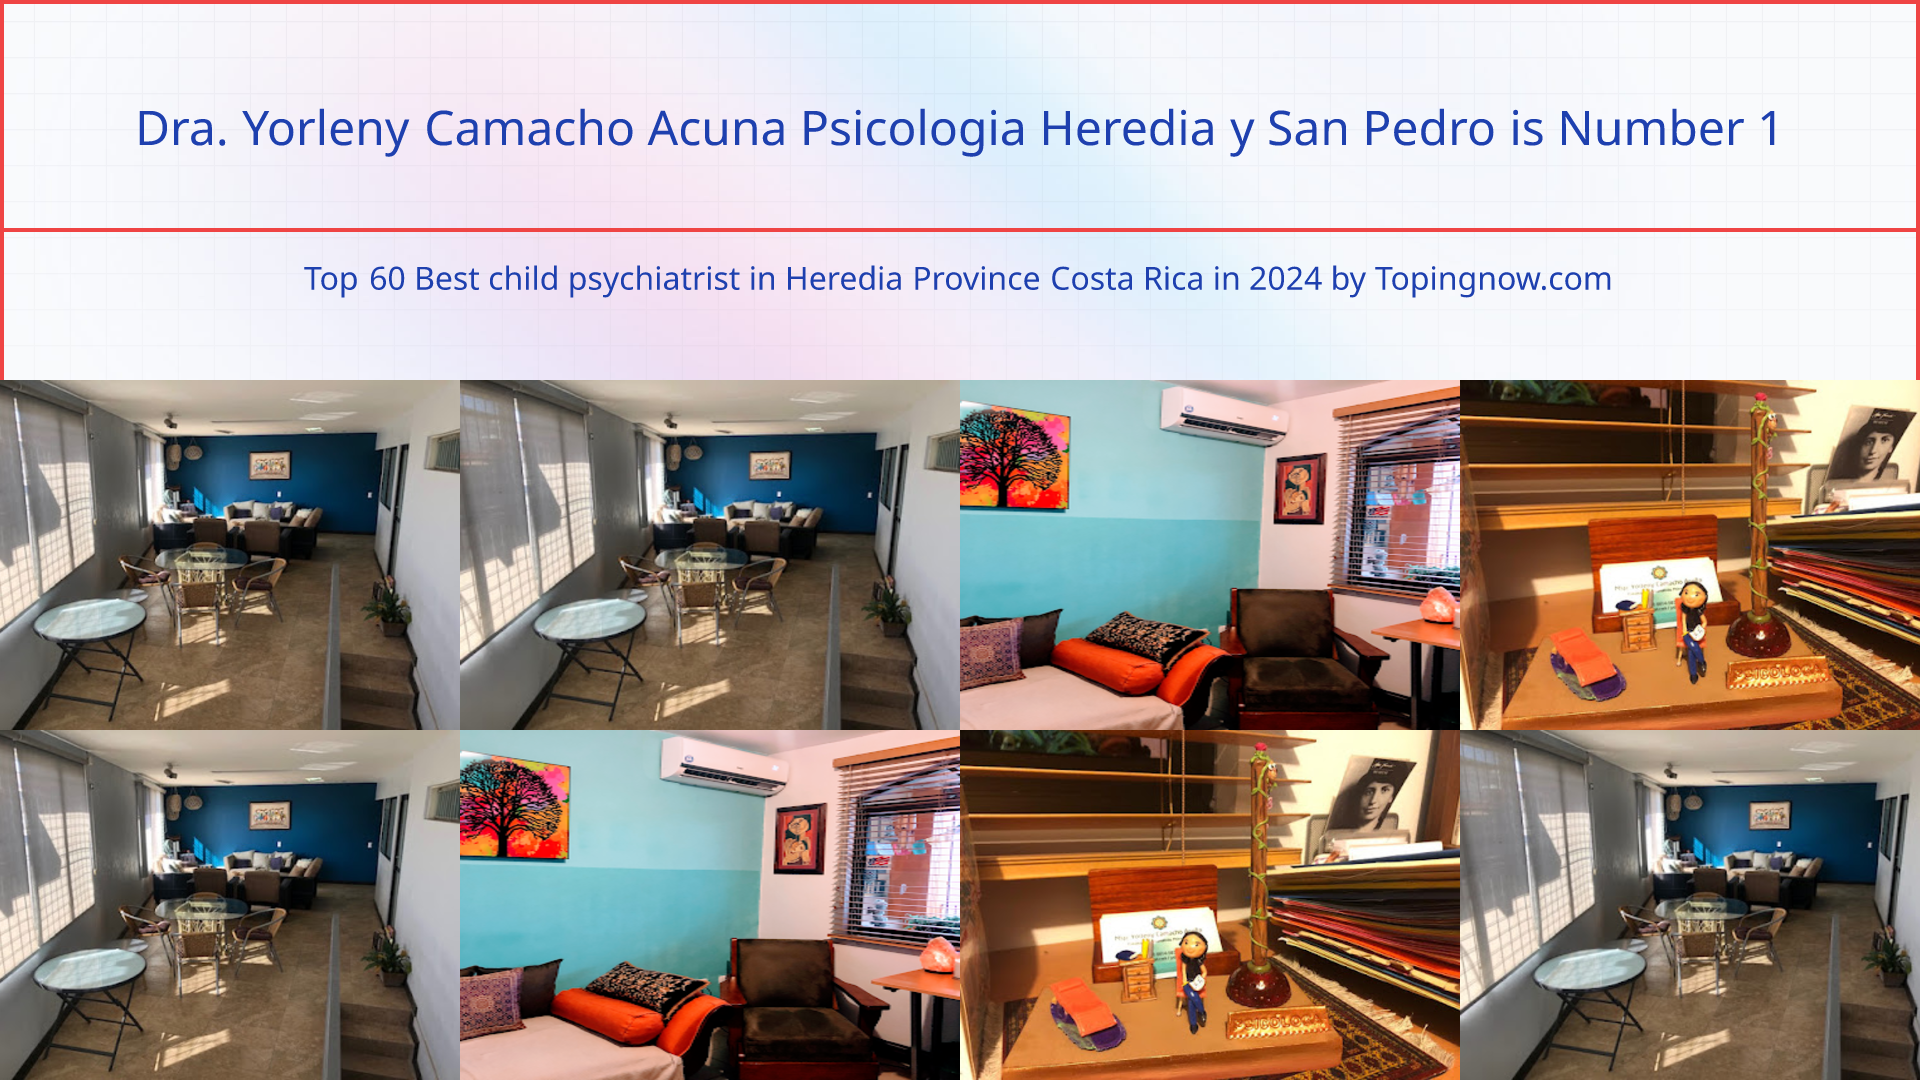 Dra. Yorleny Camacho Acuna Psicologia Heredia y San Pedro: Top 60 Best child psychiatrist in Heredia Province Costa Rica in 2024